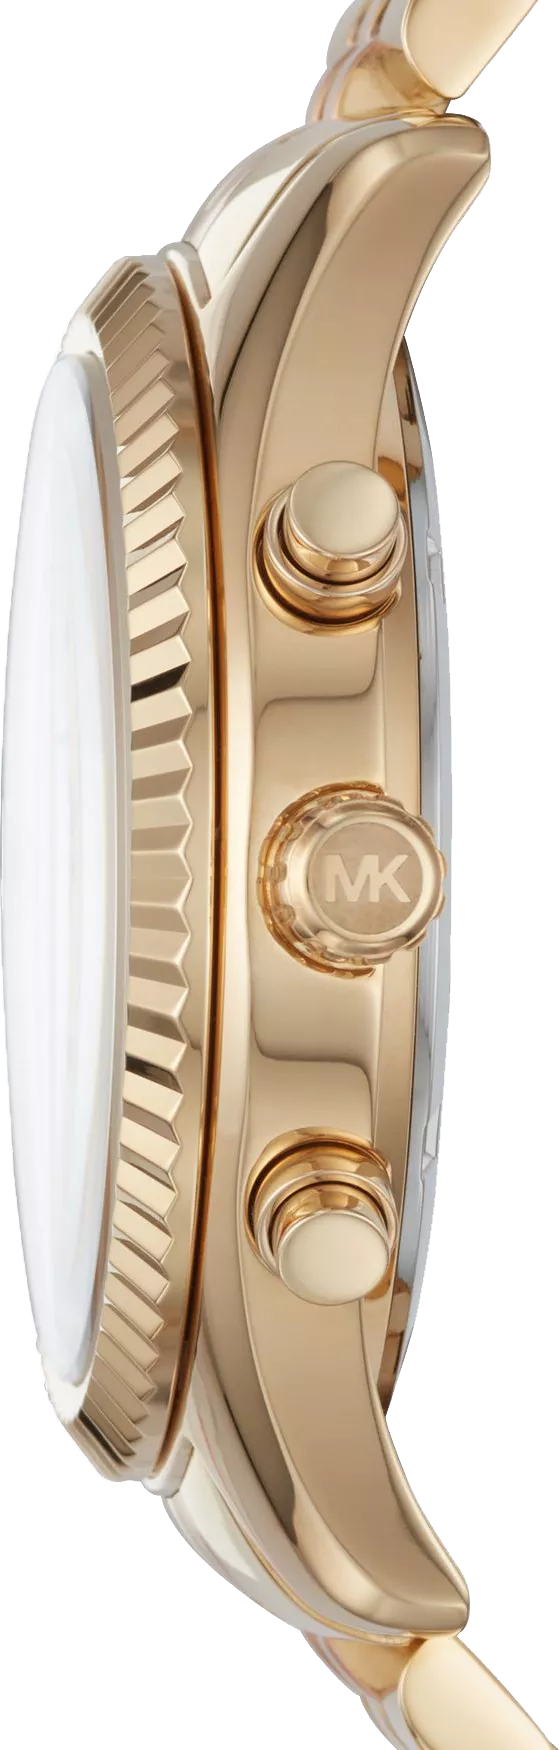 Michael Kors Lexington Two-Tone Watch 44mm